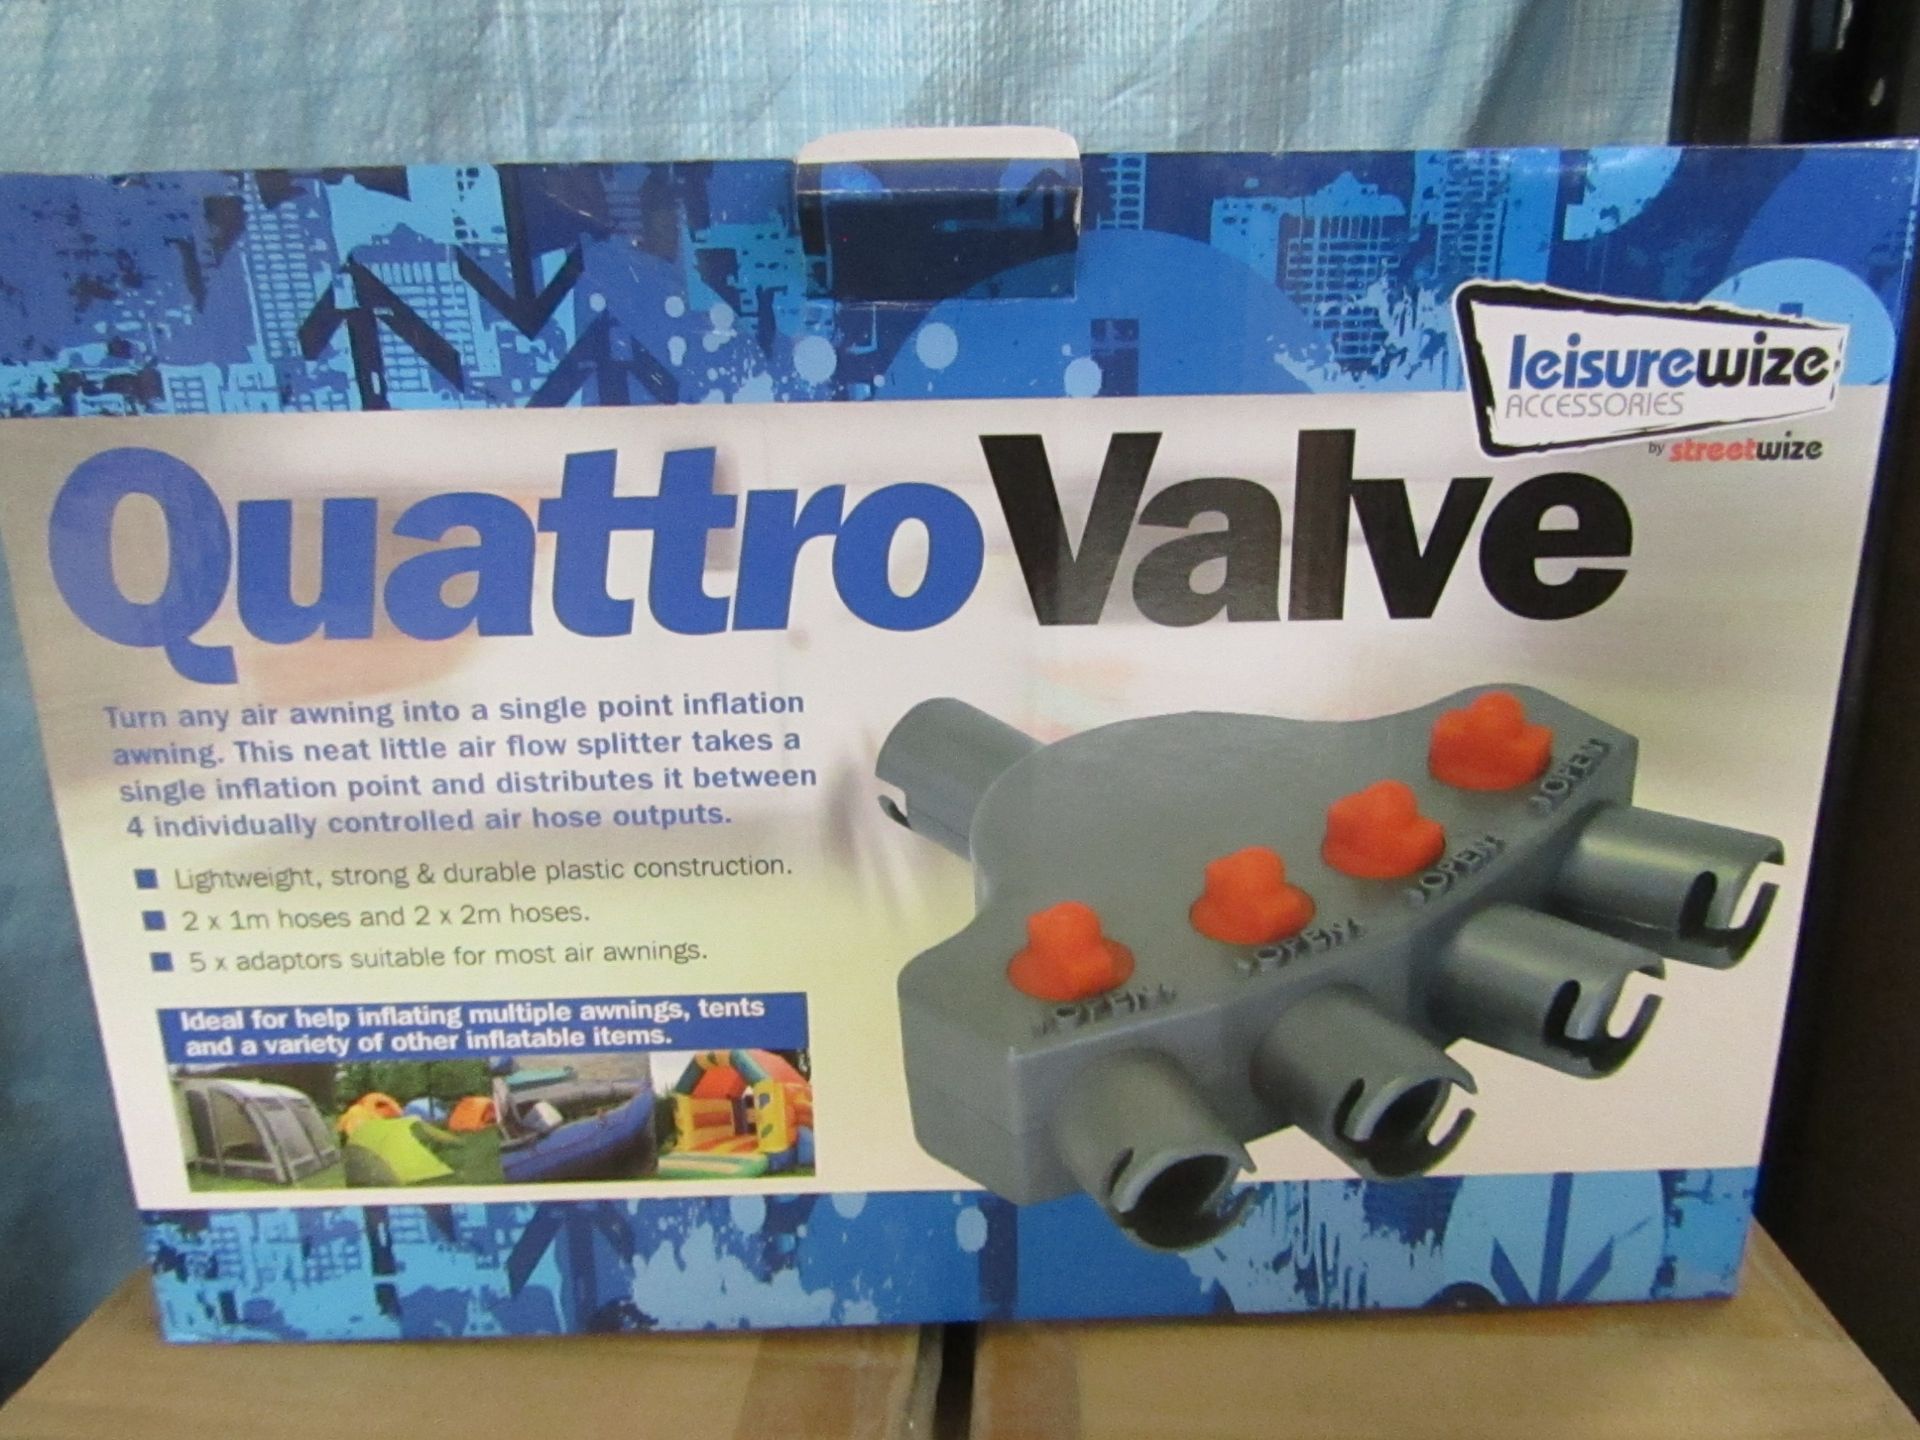 Leisurewize quattro valve, new and boxed.